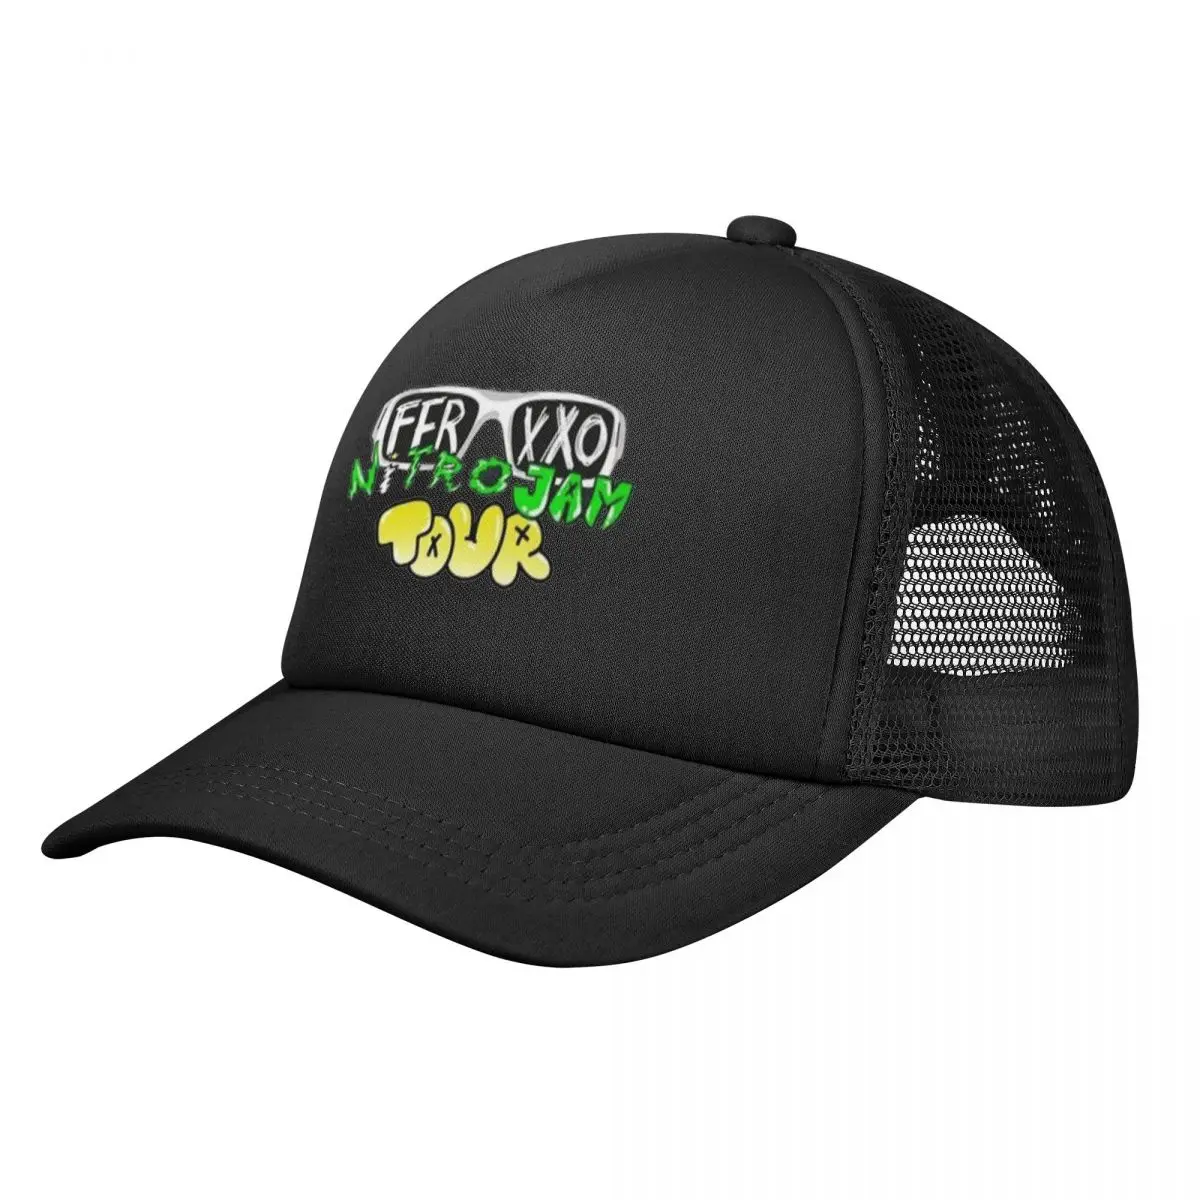 

Feid Ferxxo Nitro Jam Tour Mesh Baseball Cap Unisex Hip-Hop Trucker Worker Cap 90s Rapper Hats Adjustable Snapback Caps Sun Caps